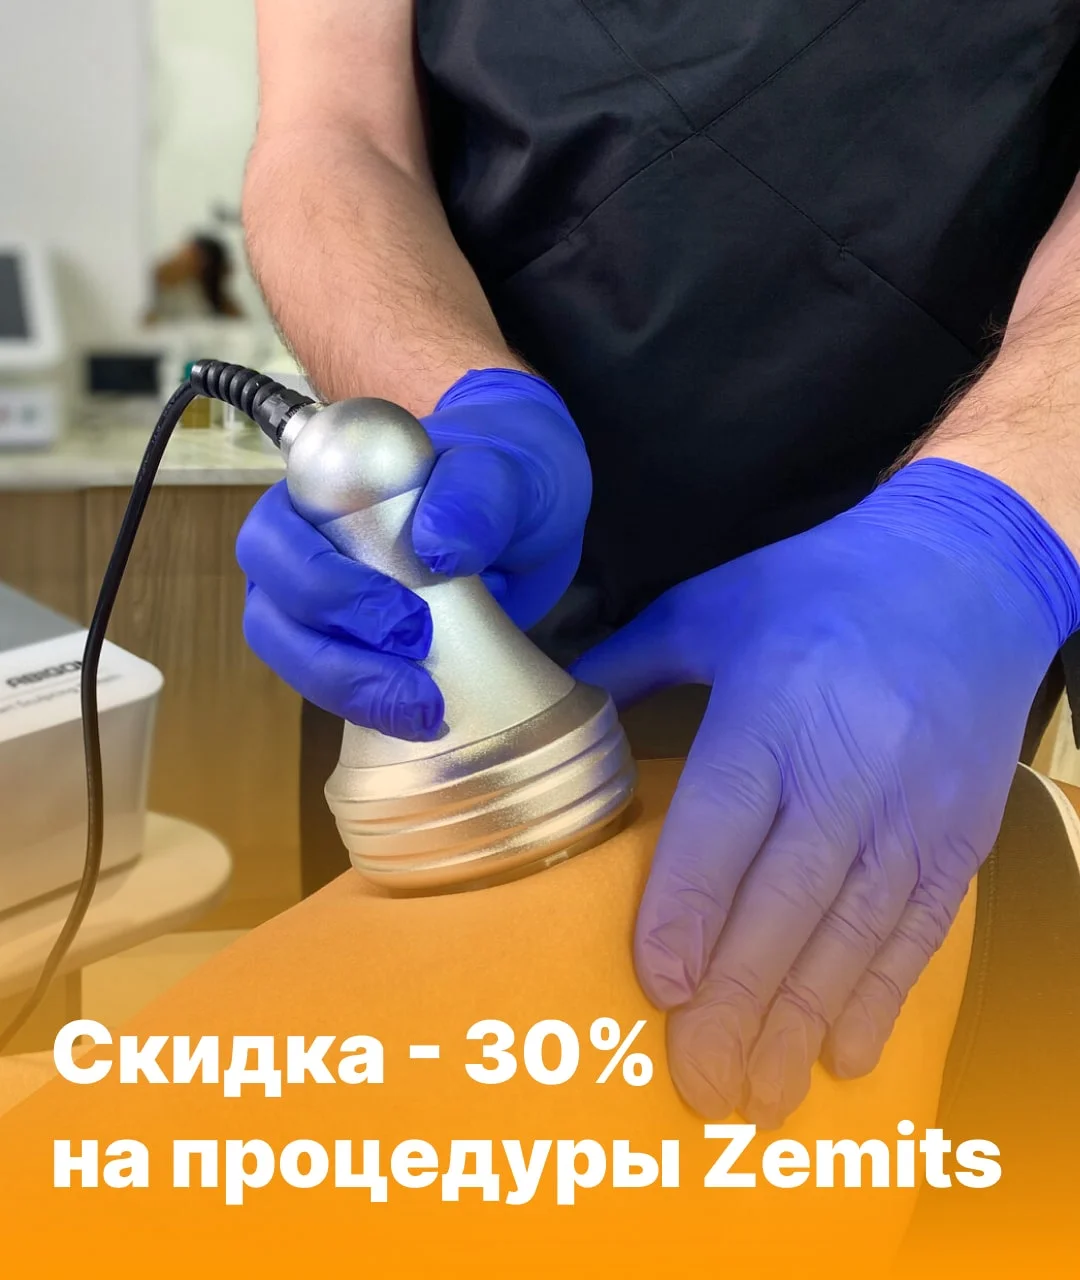 Скидка - 30% на процедуры Zemits донецк, макеевка